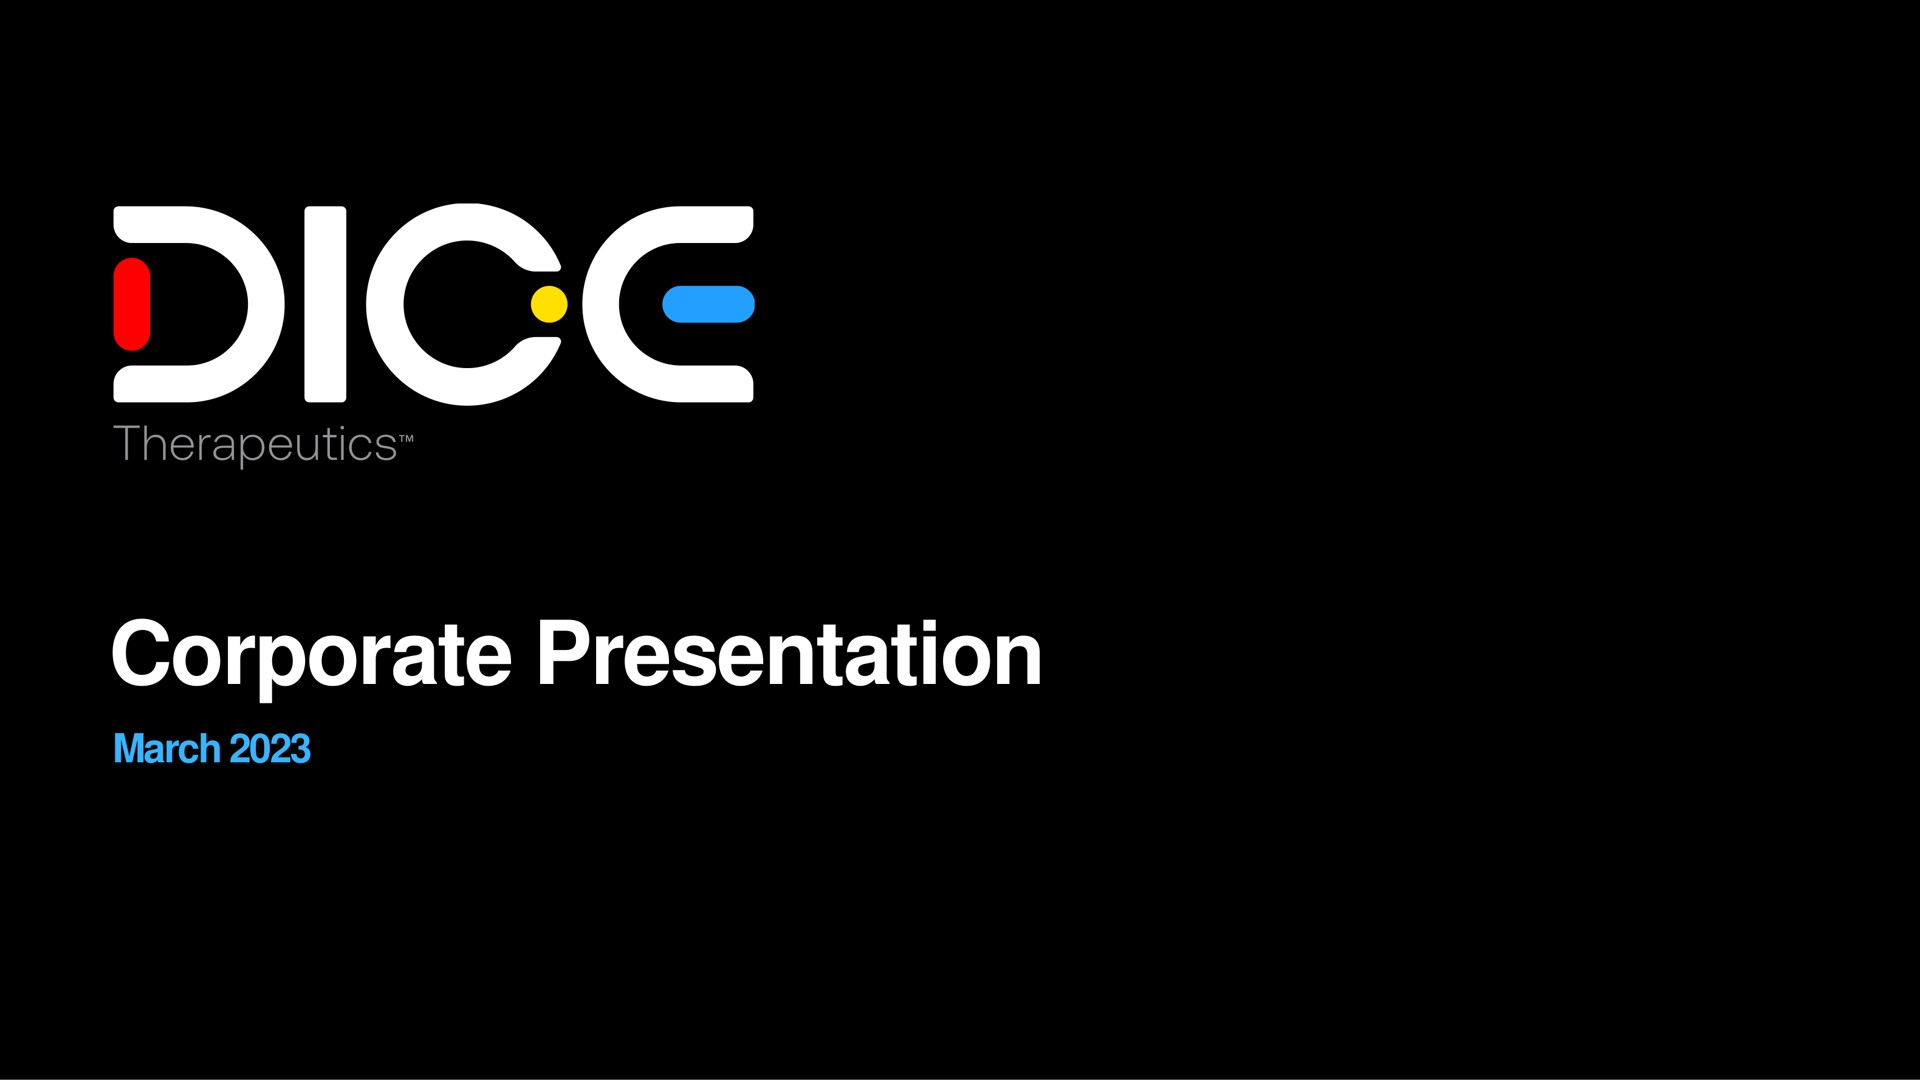 corporate presentation | DICE Therapeutics